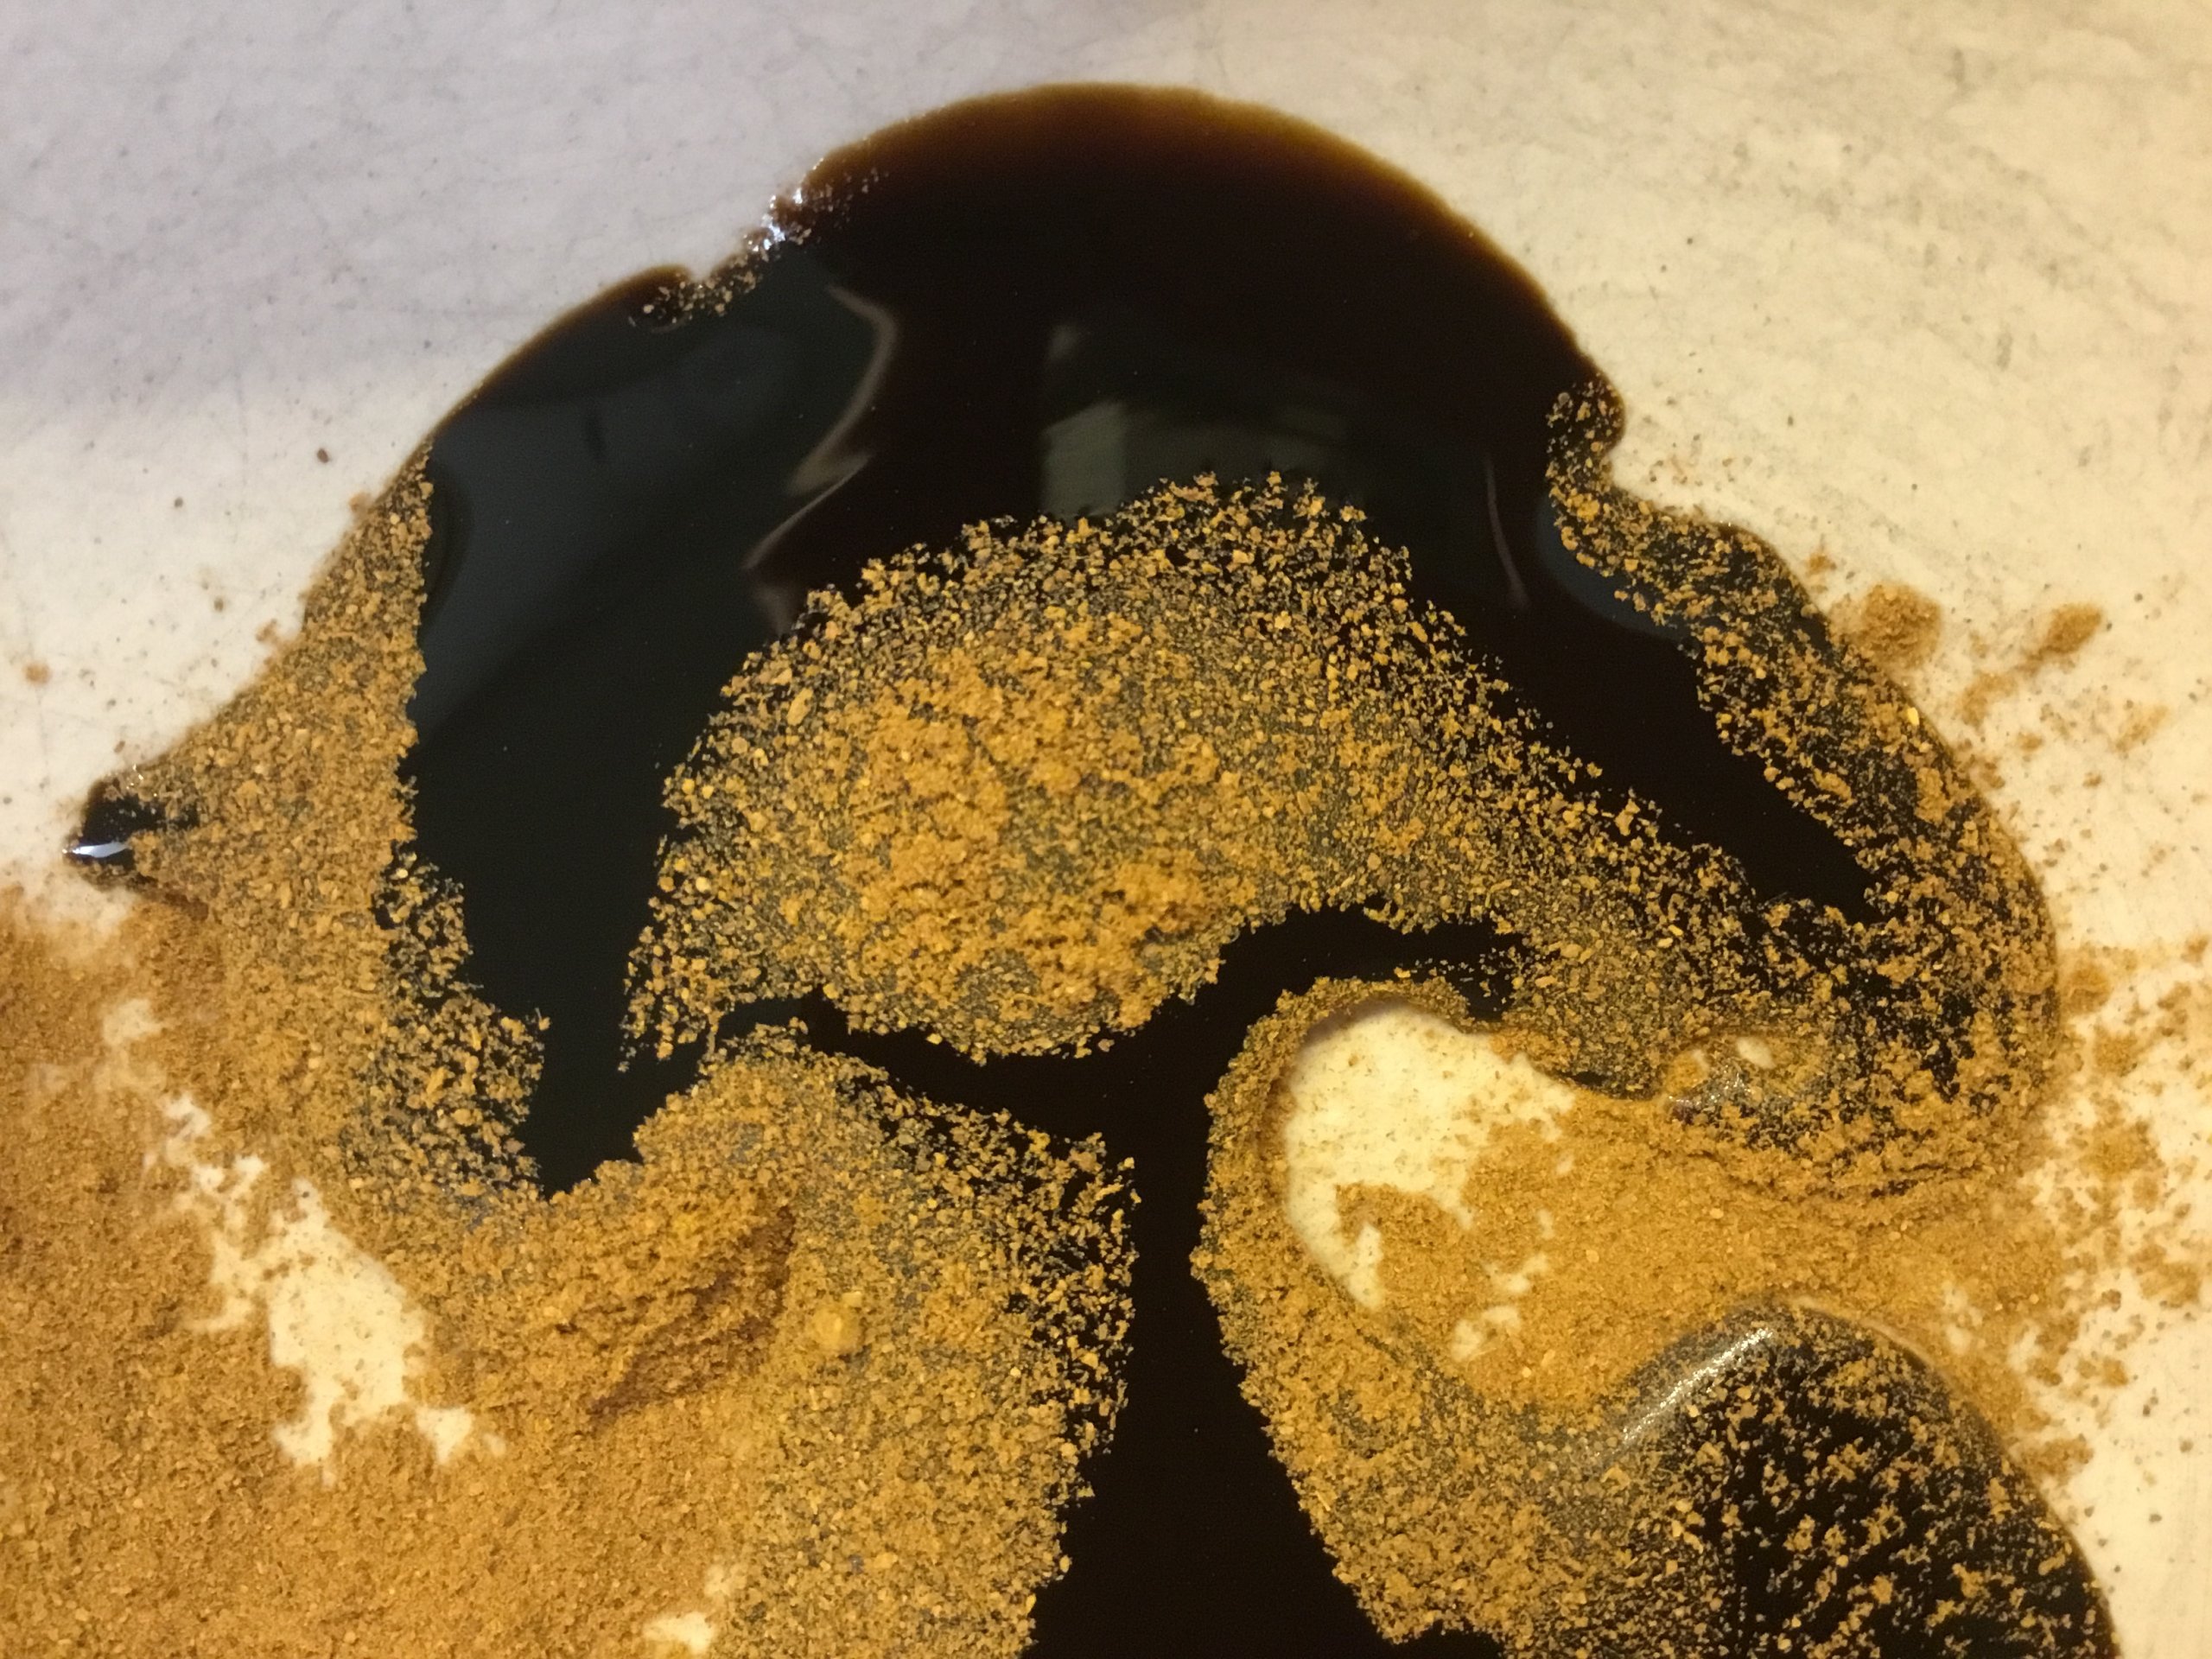 Molasses on ground cinnamon